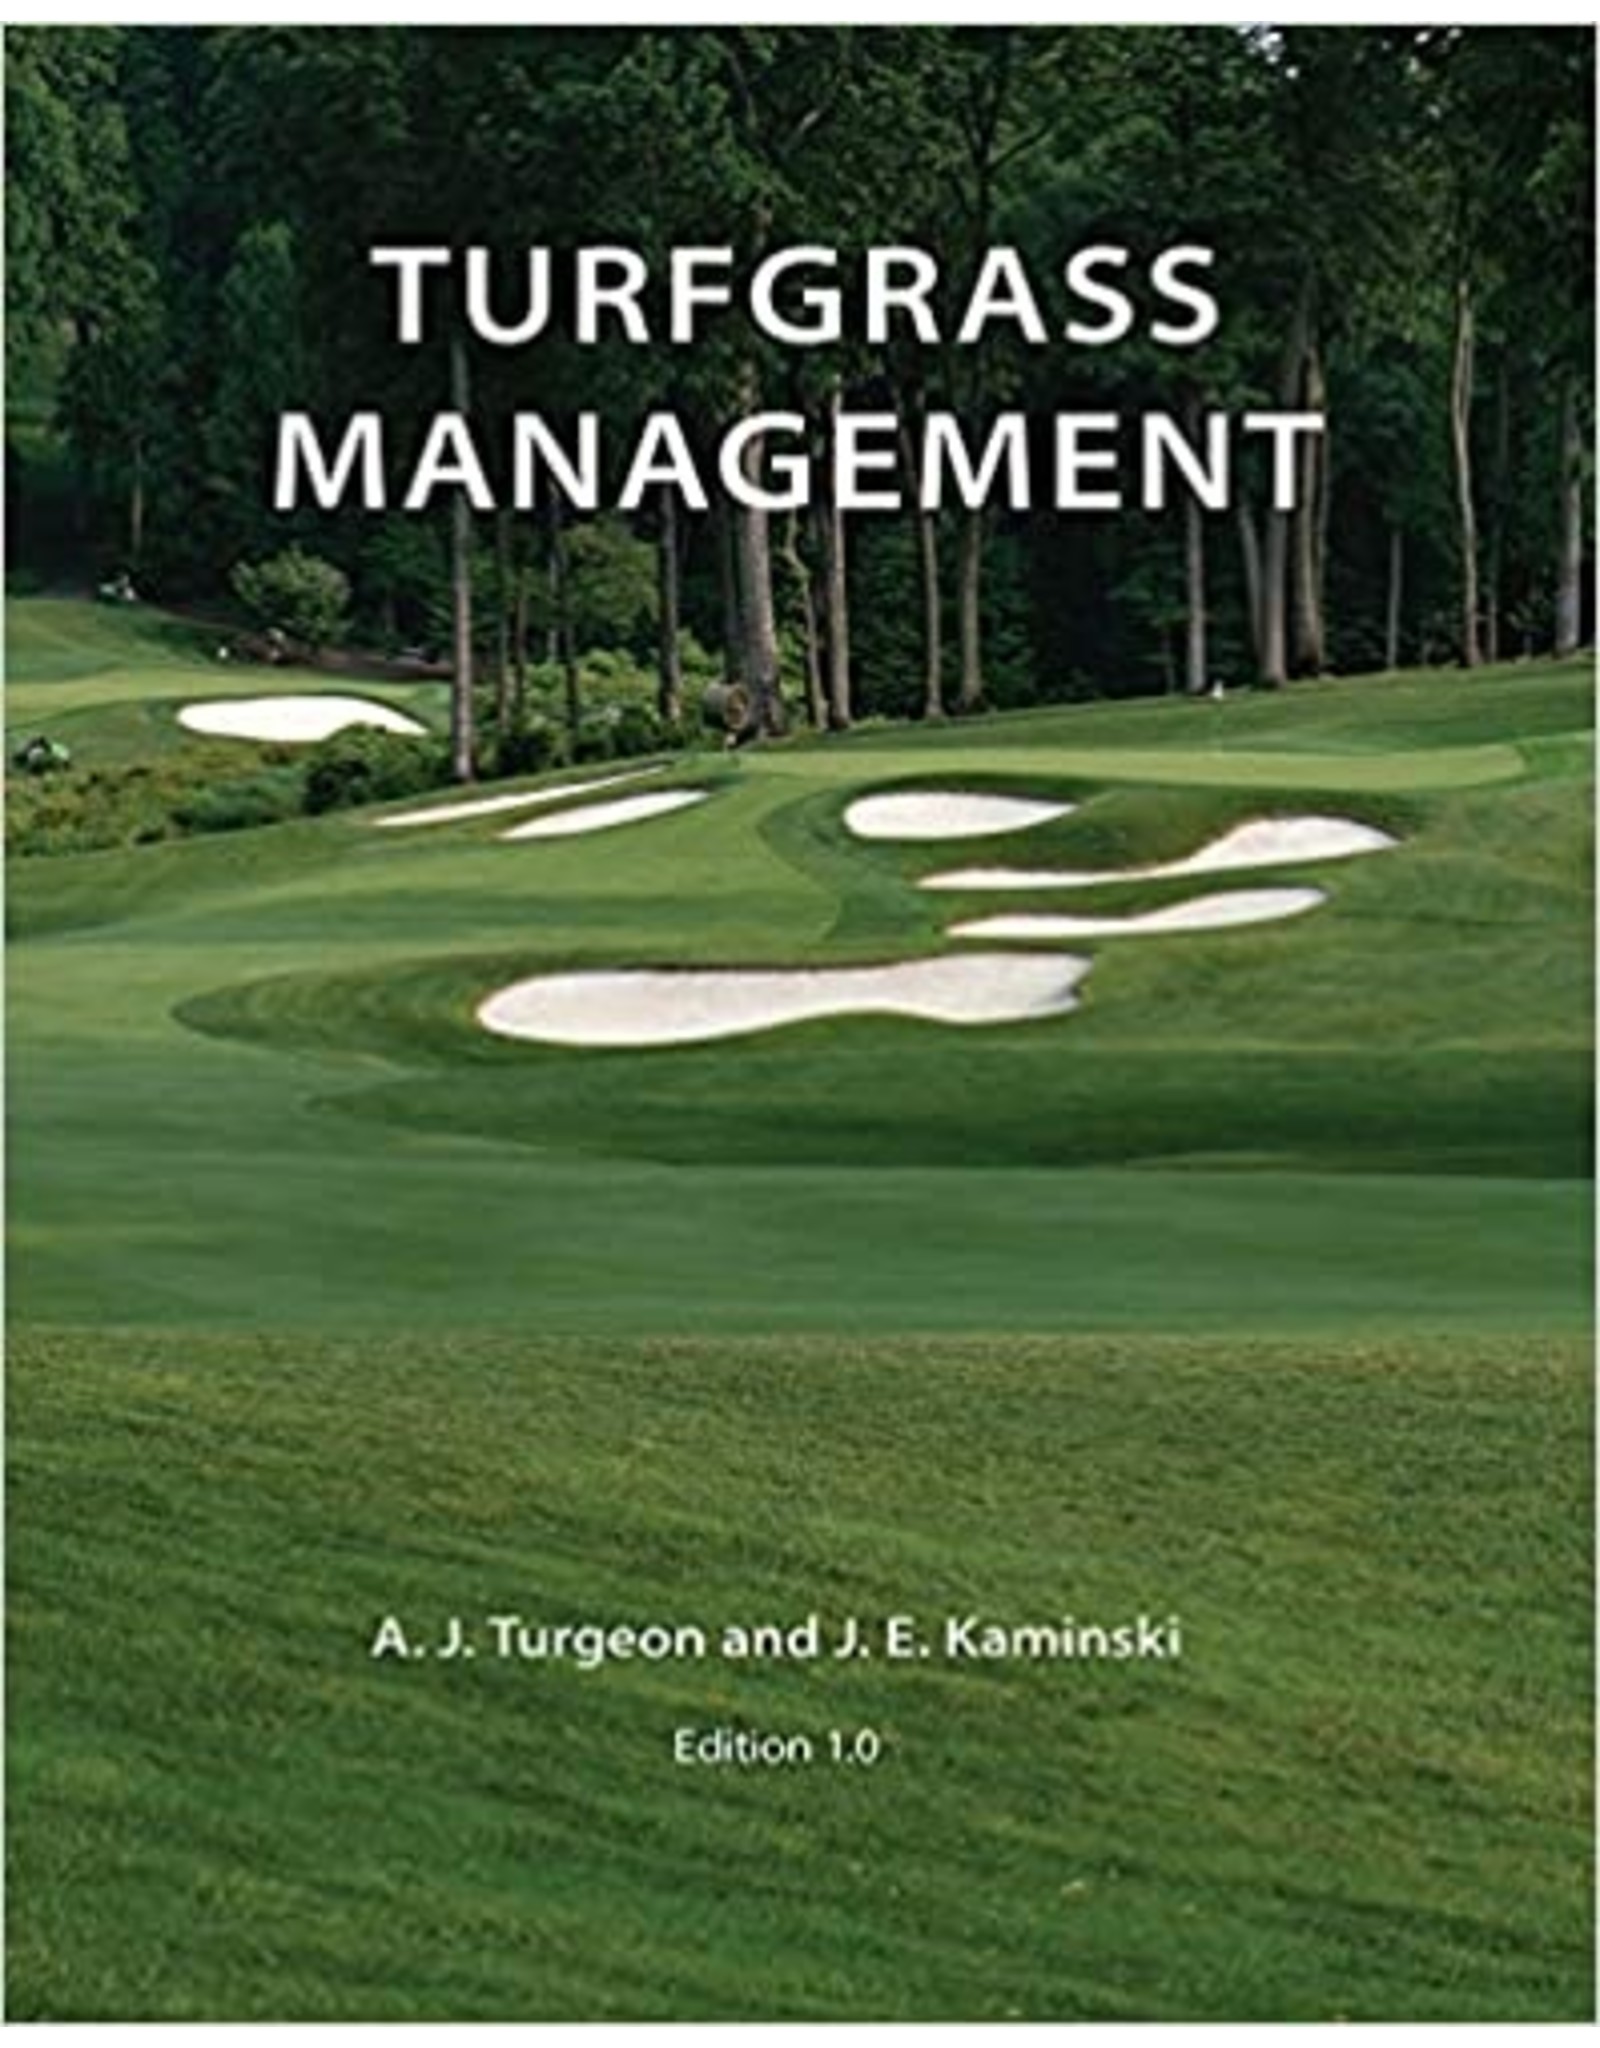 Turfgrass Management - Edition 1.0